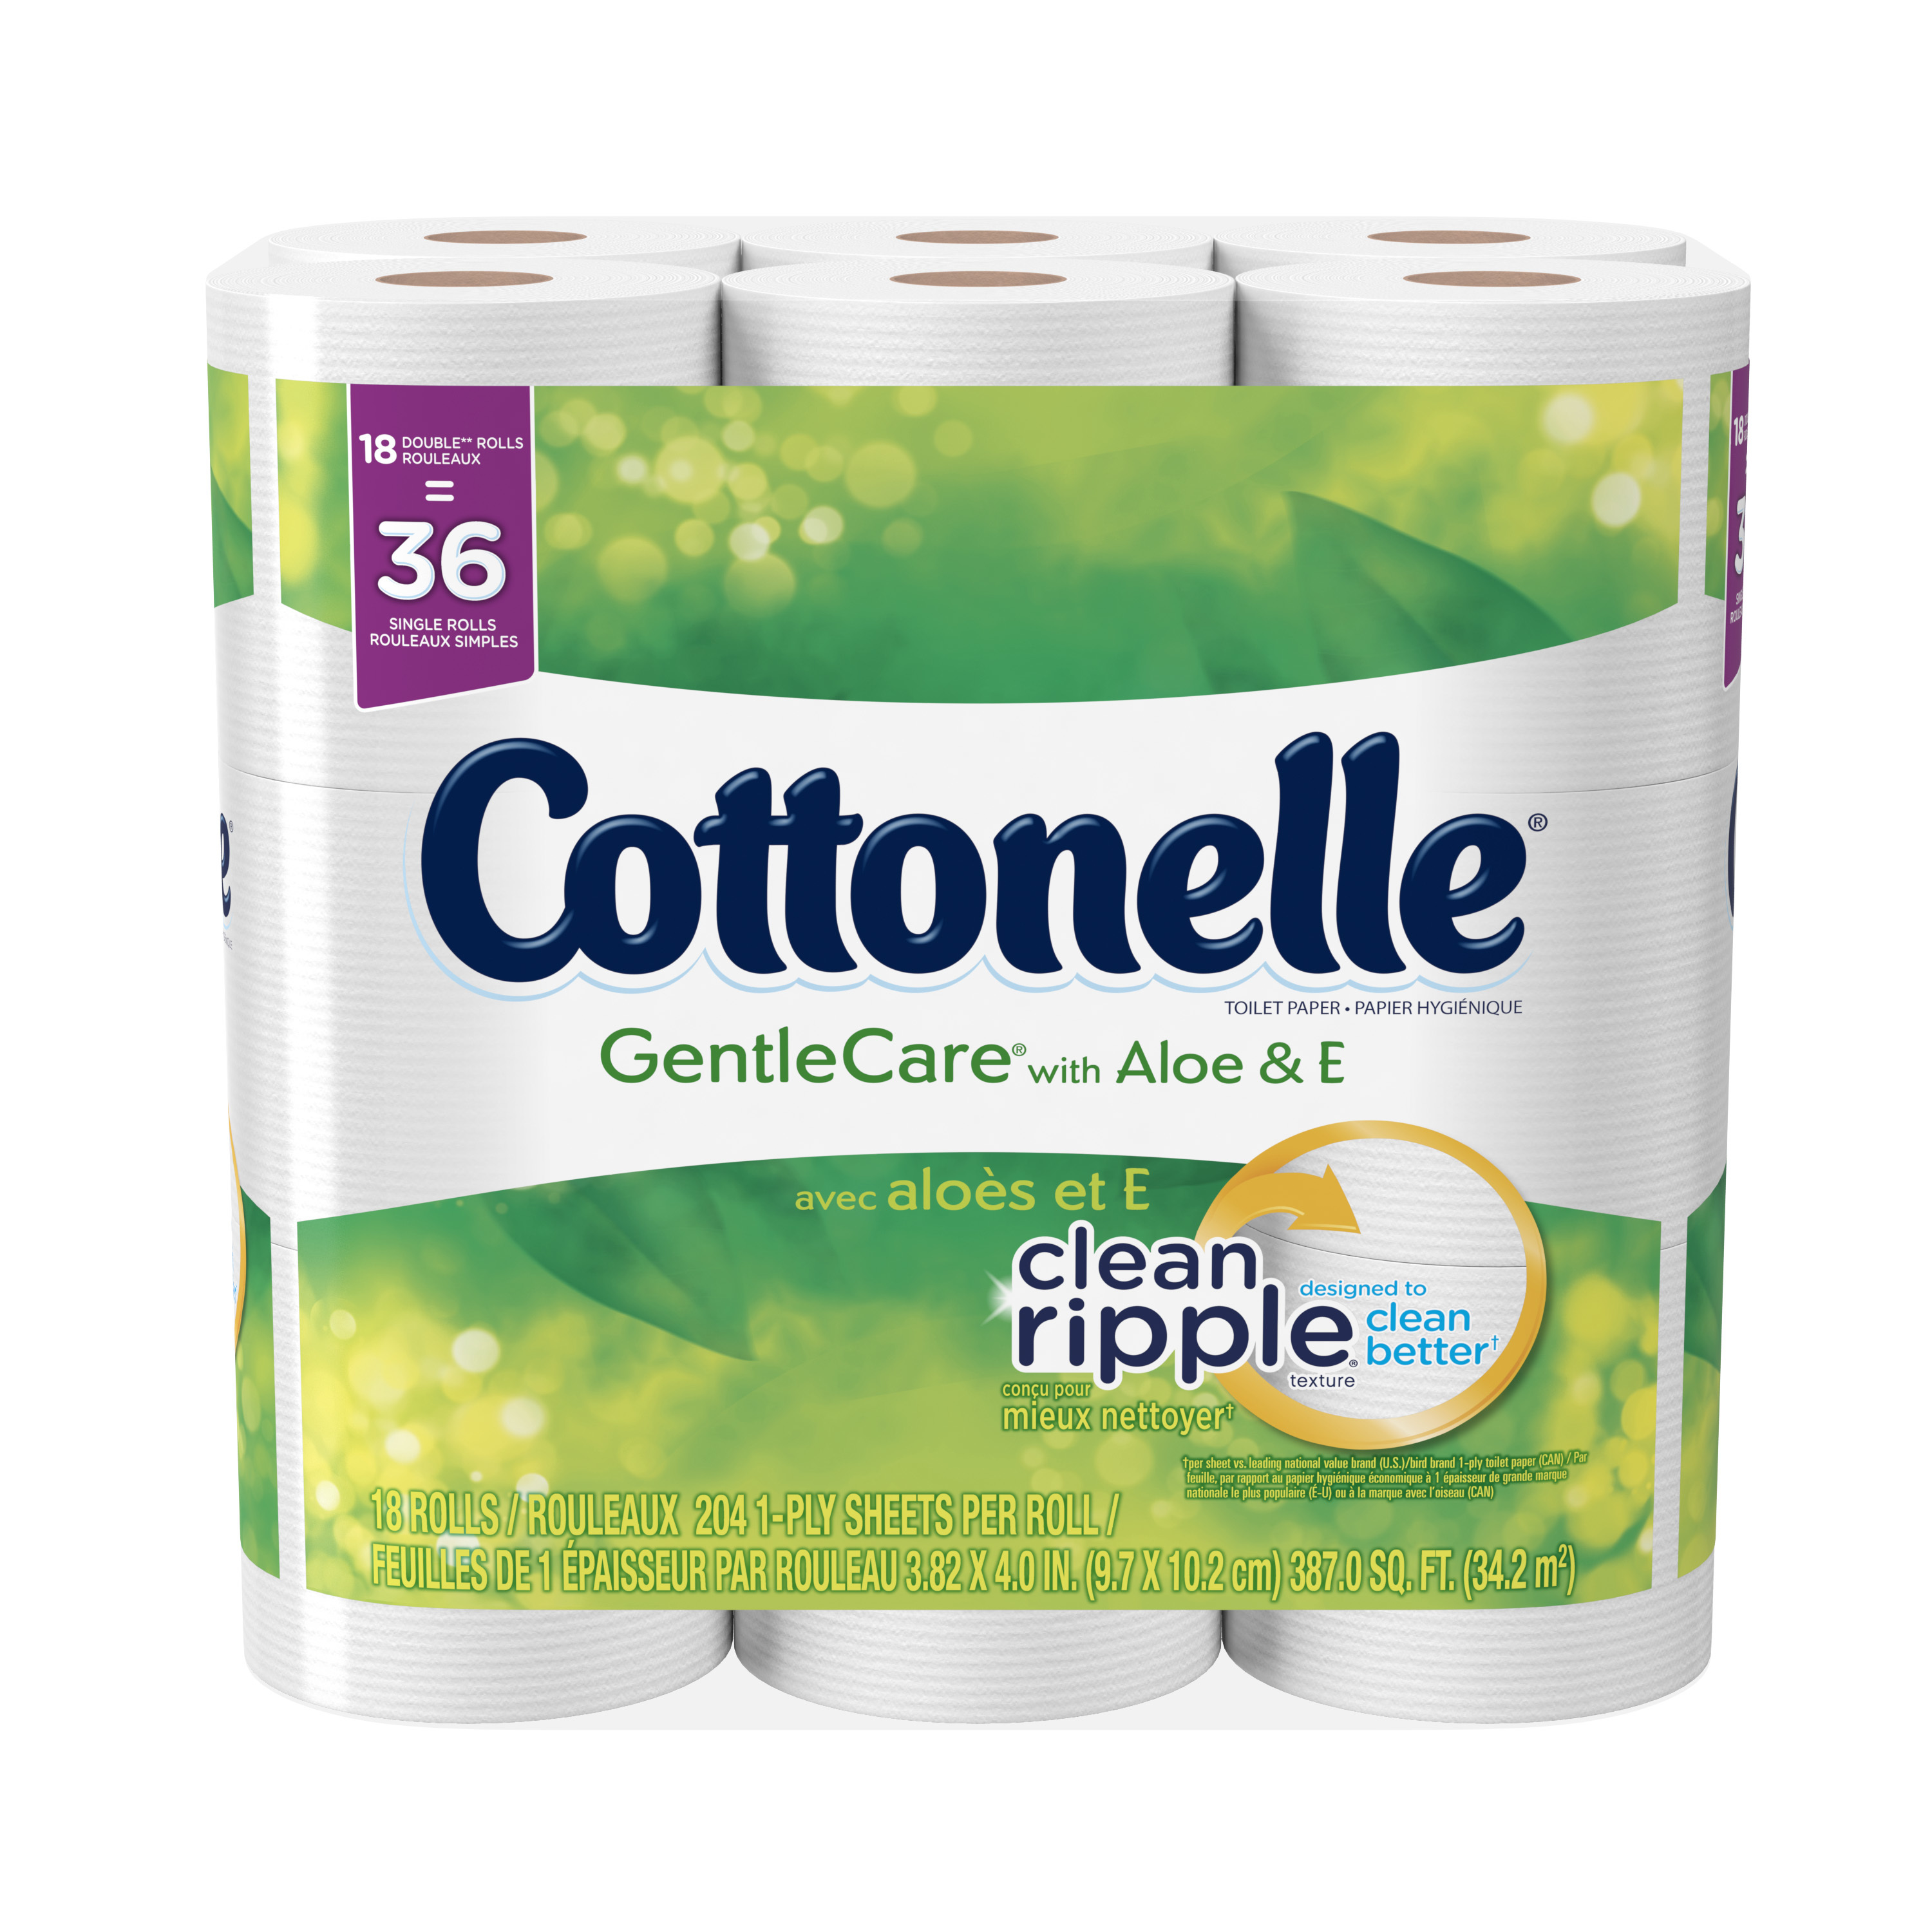 Cottonelle Gentle Care Toilet Paper, 18 Double Rolls - image 1 of 5